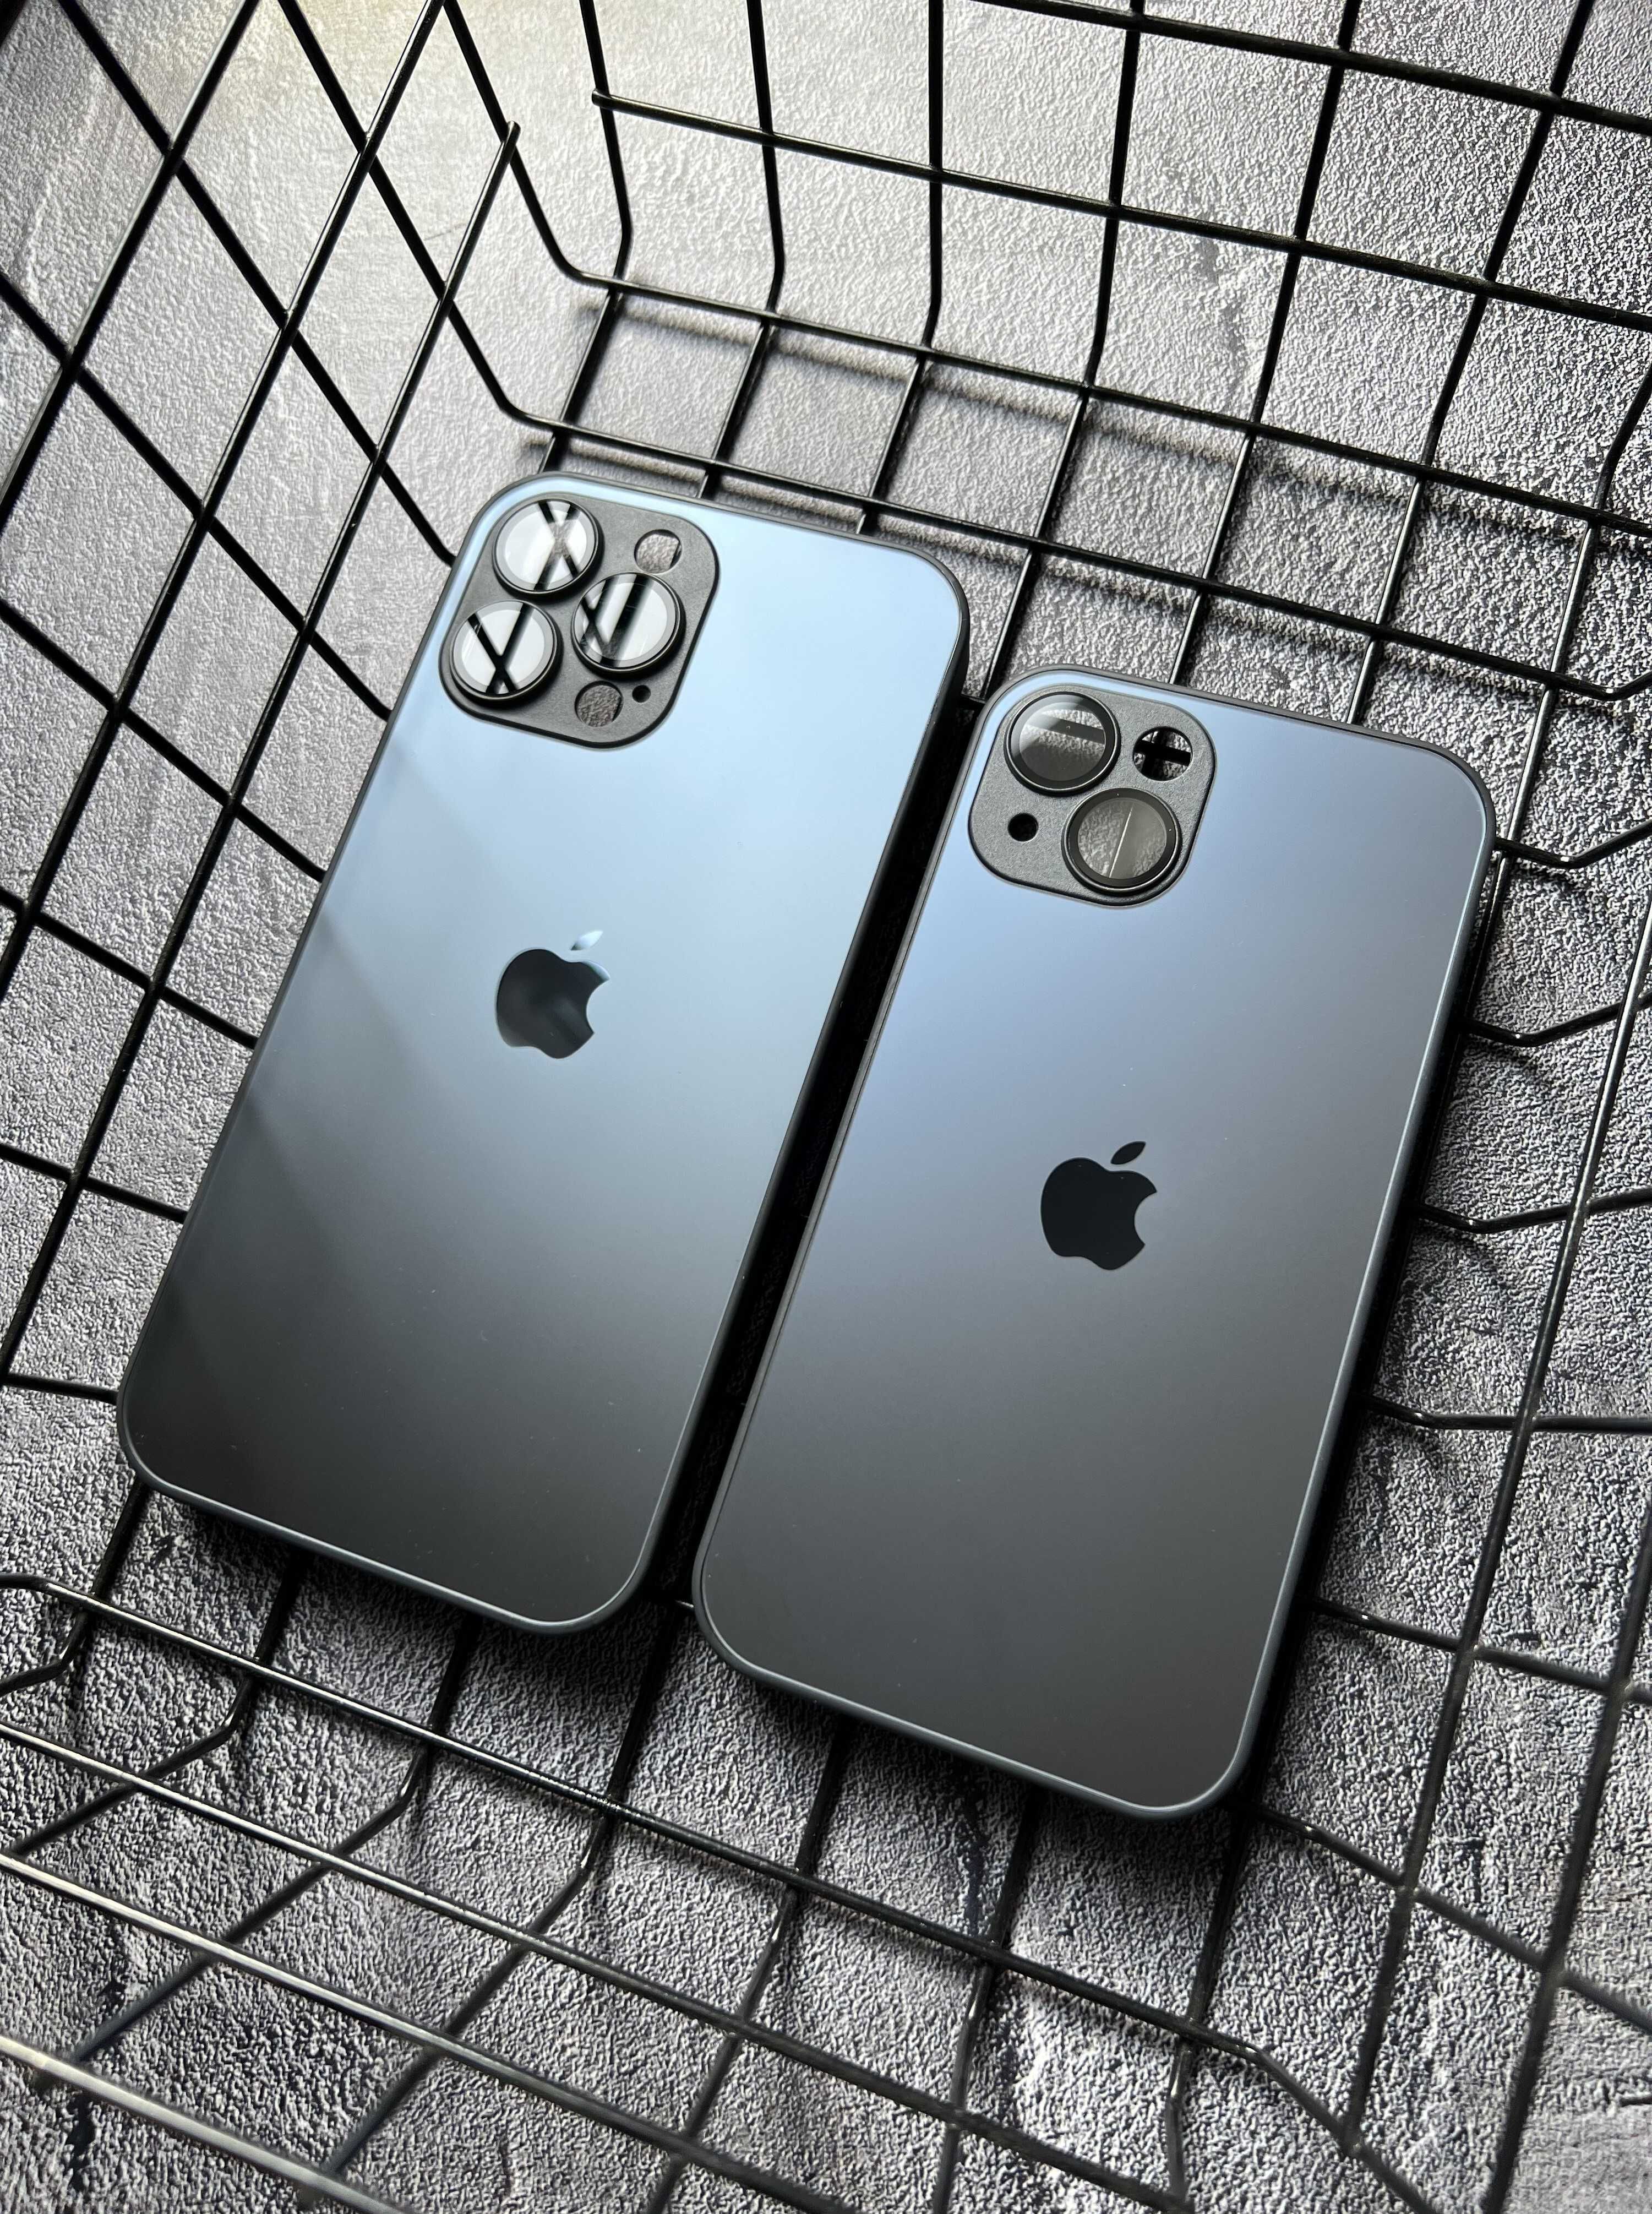 Чехол на iPhone 11 про макс и другие, стеклянный Айфон Glass case А.12